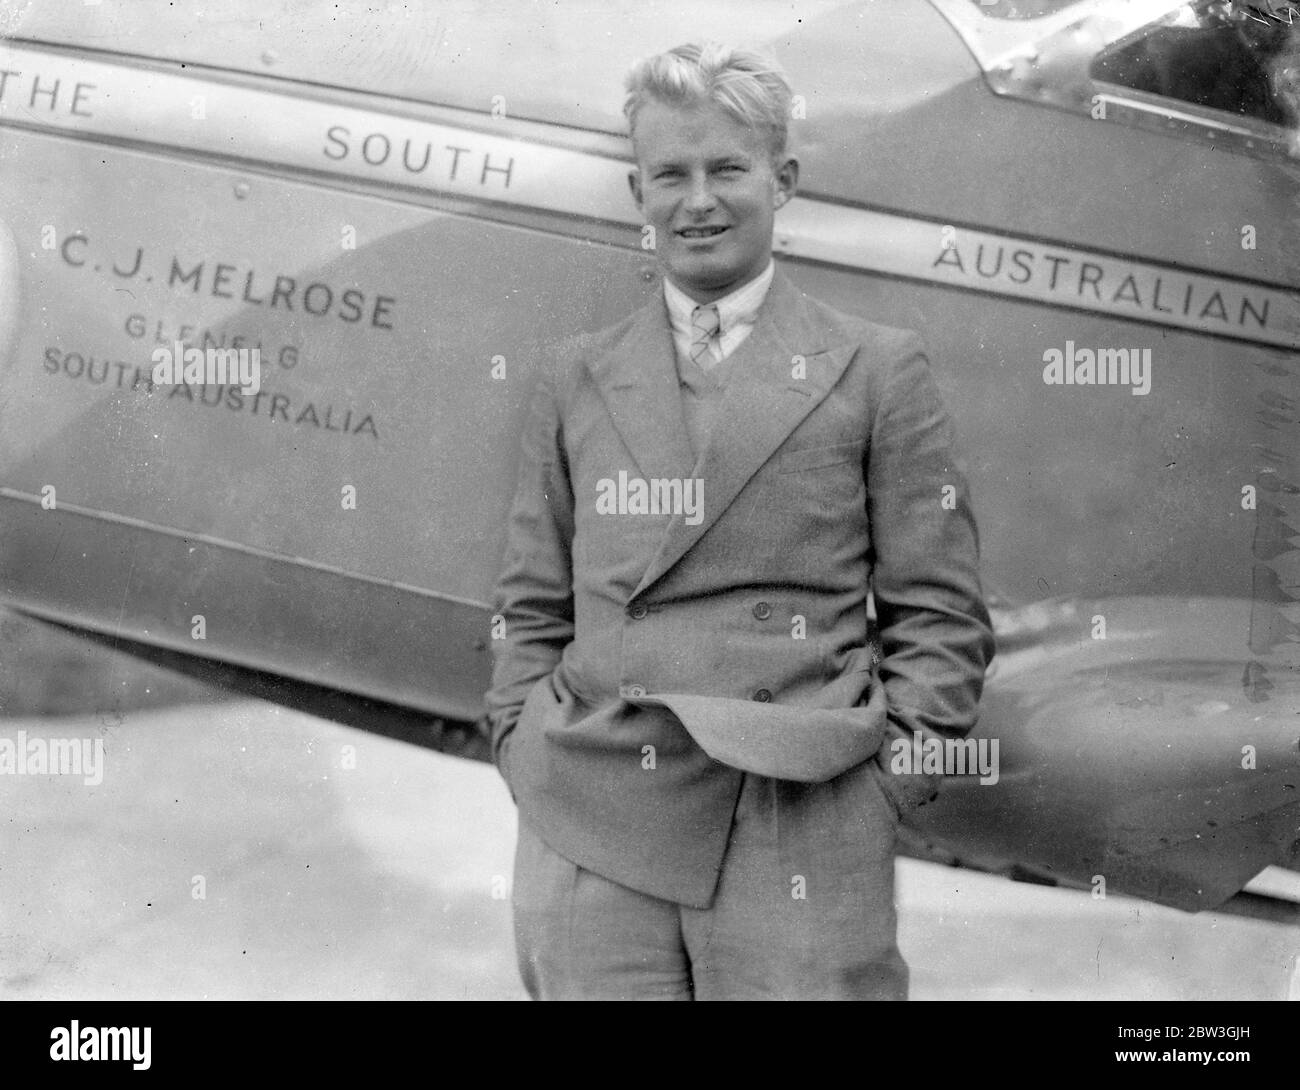 Melrose taking off on  goodwill flight  to Australia . C J Melrose at Heston . 4 April 1935 Stock Photo